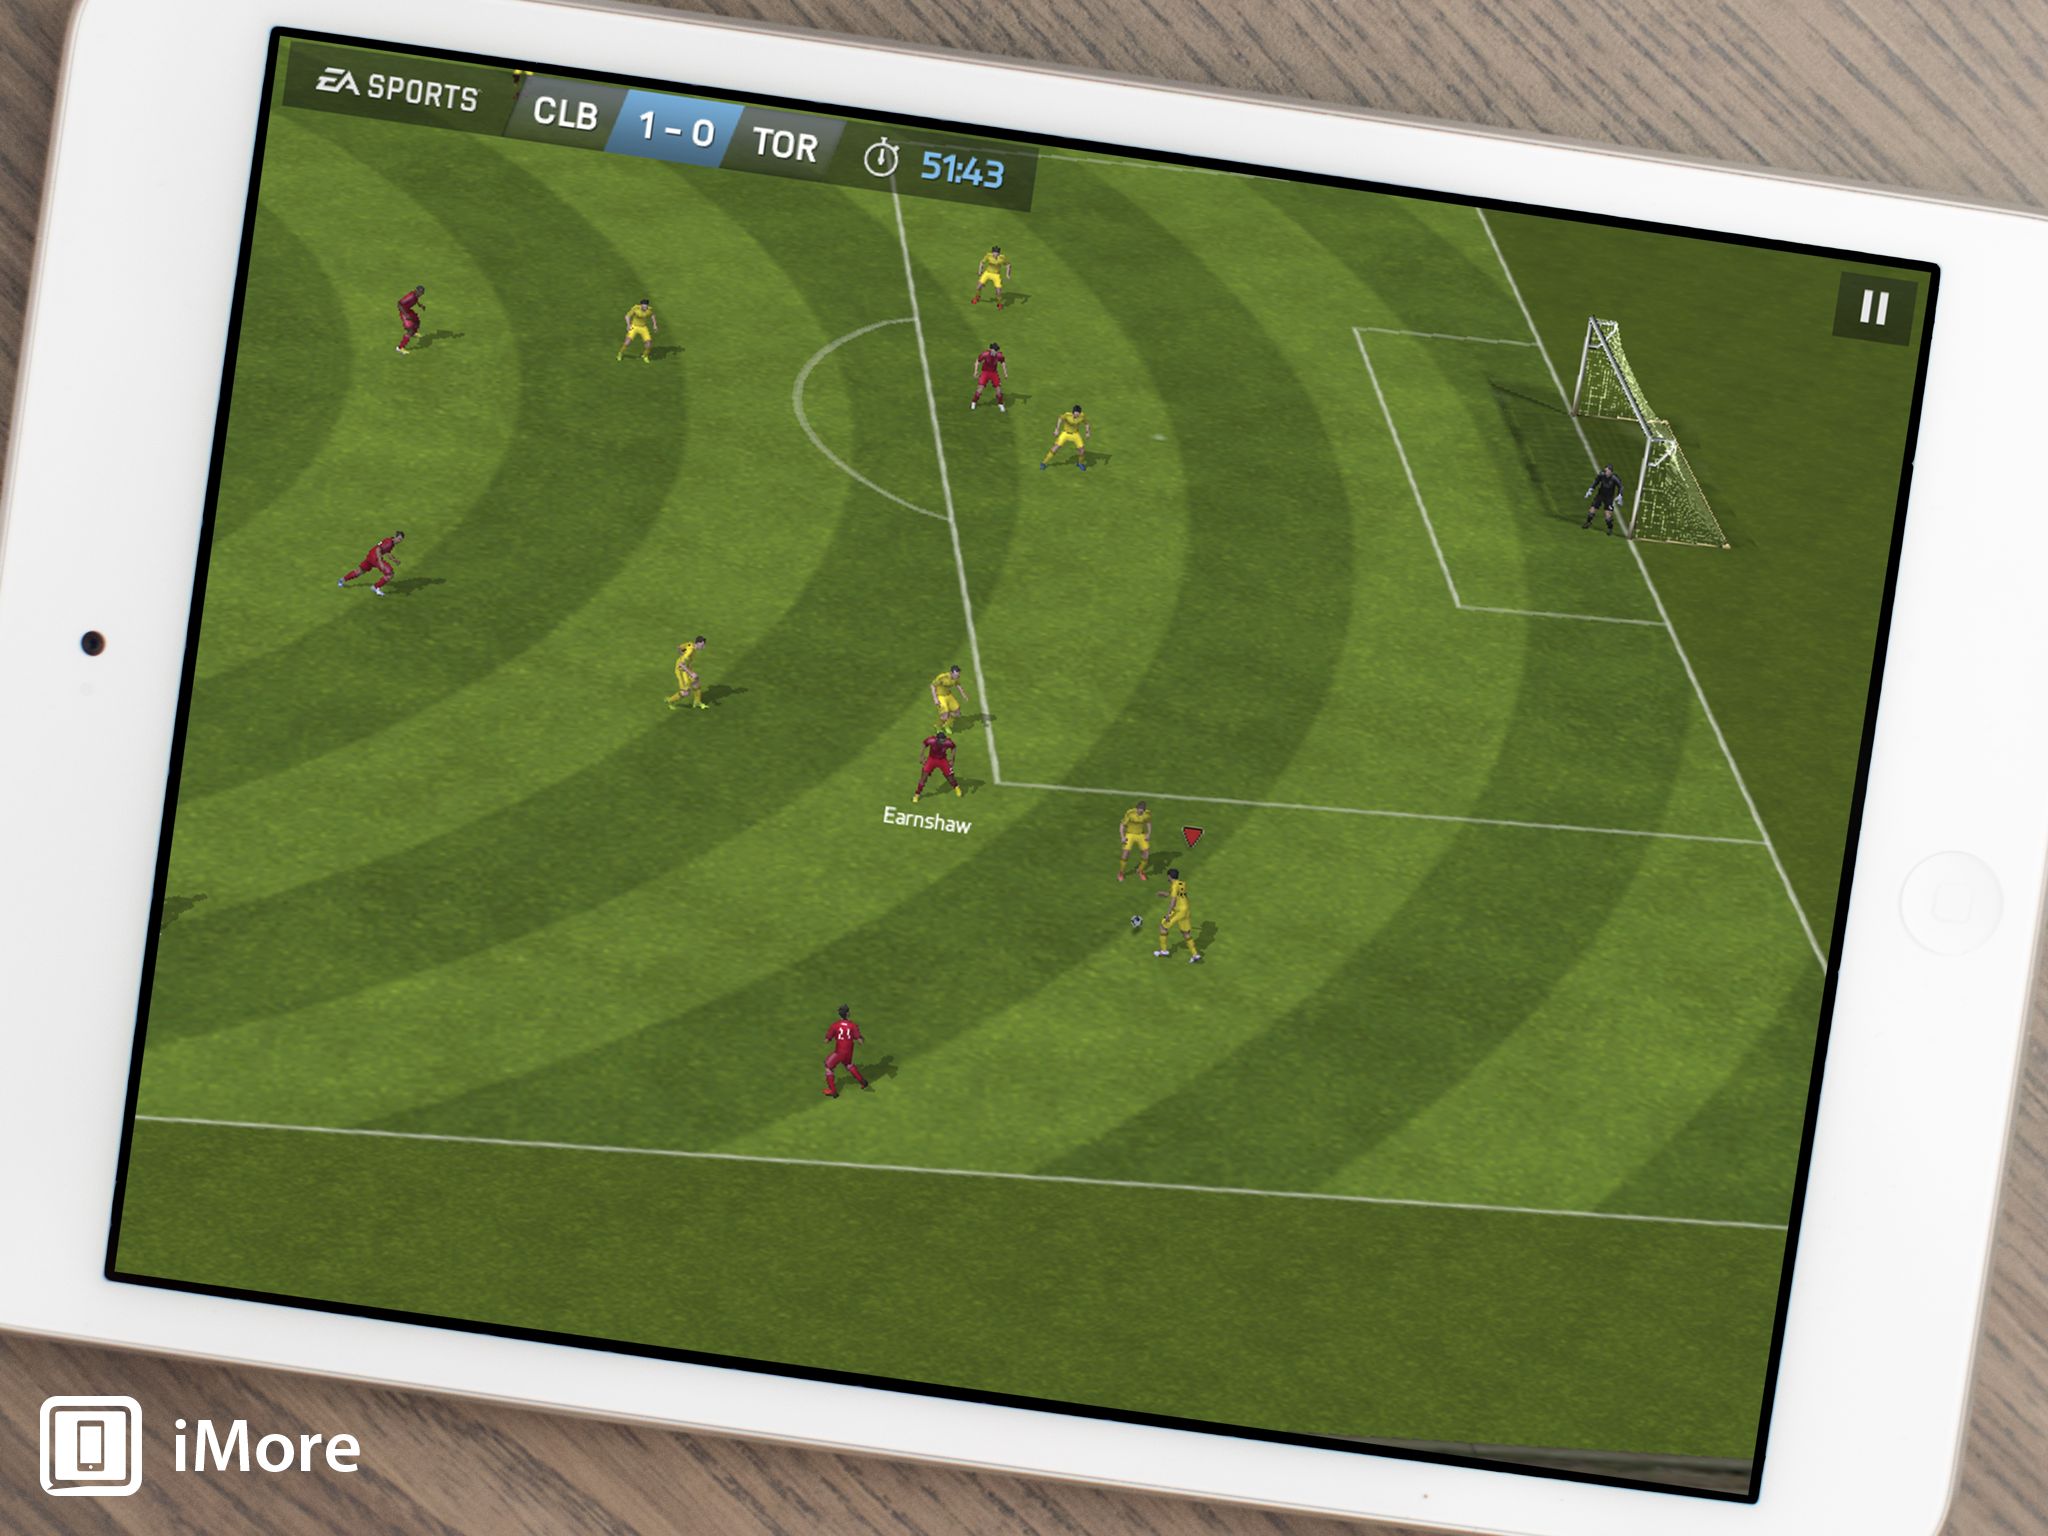 FIFA 14 brings the 2014 soccer season to iOS